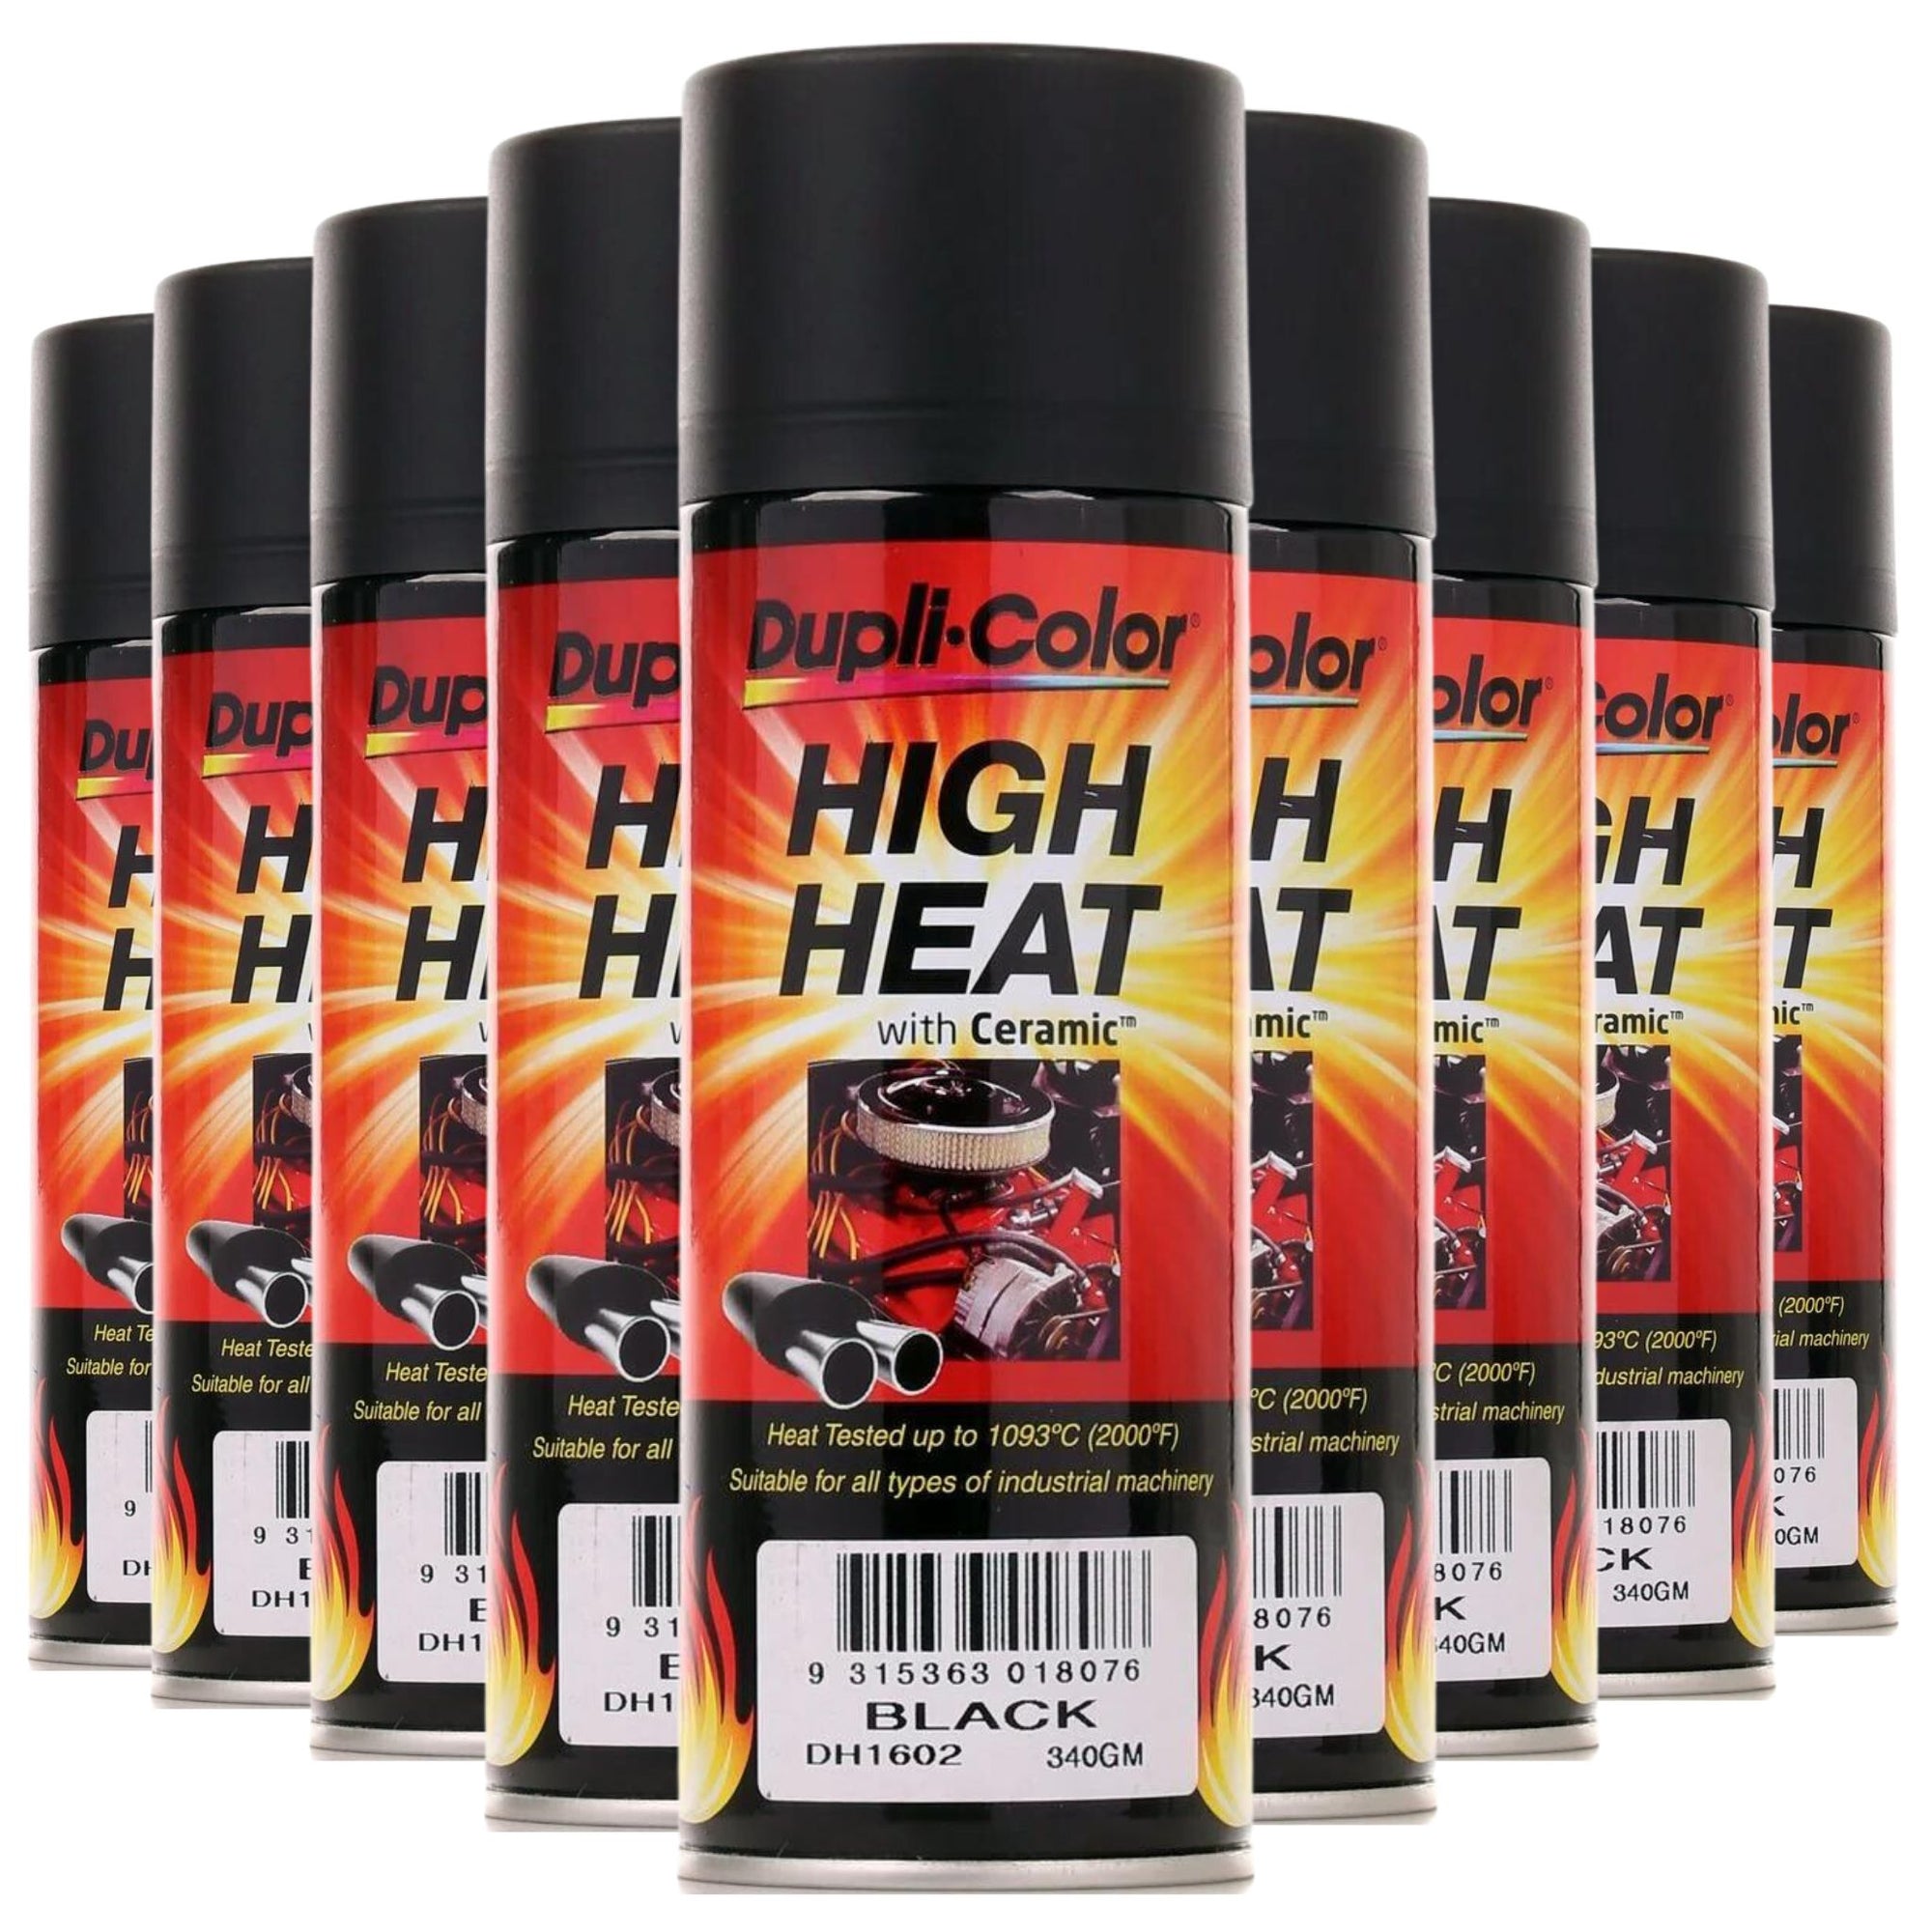 Dupli-Color High Heat Ceramic Paint Black 340g - DH1602 Bulk 12 Pack - South East Clearance Centre